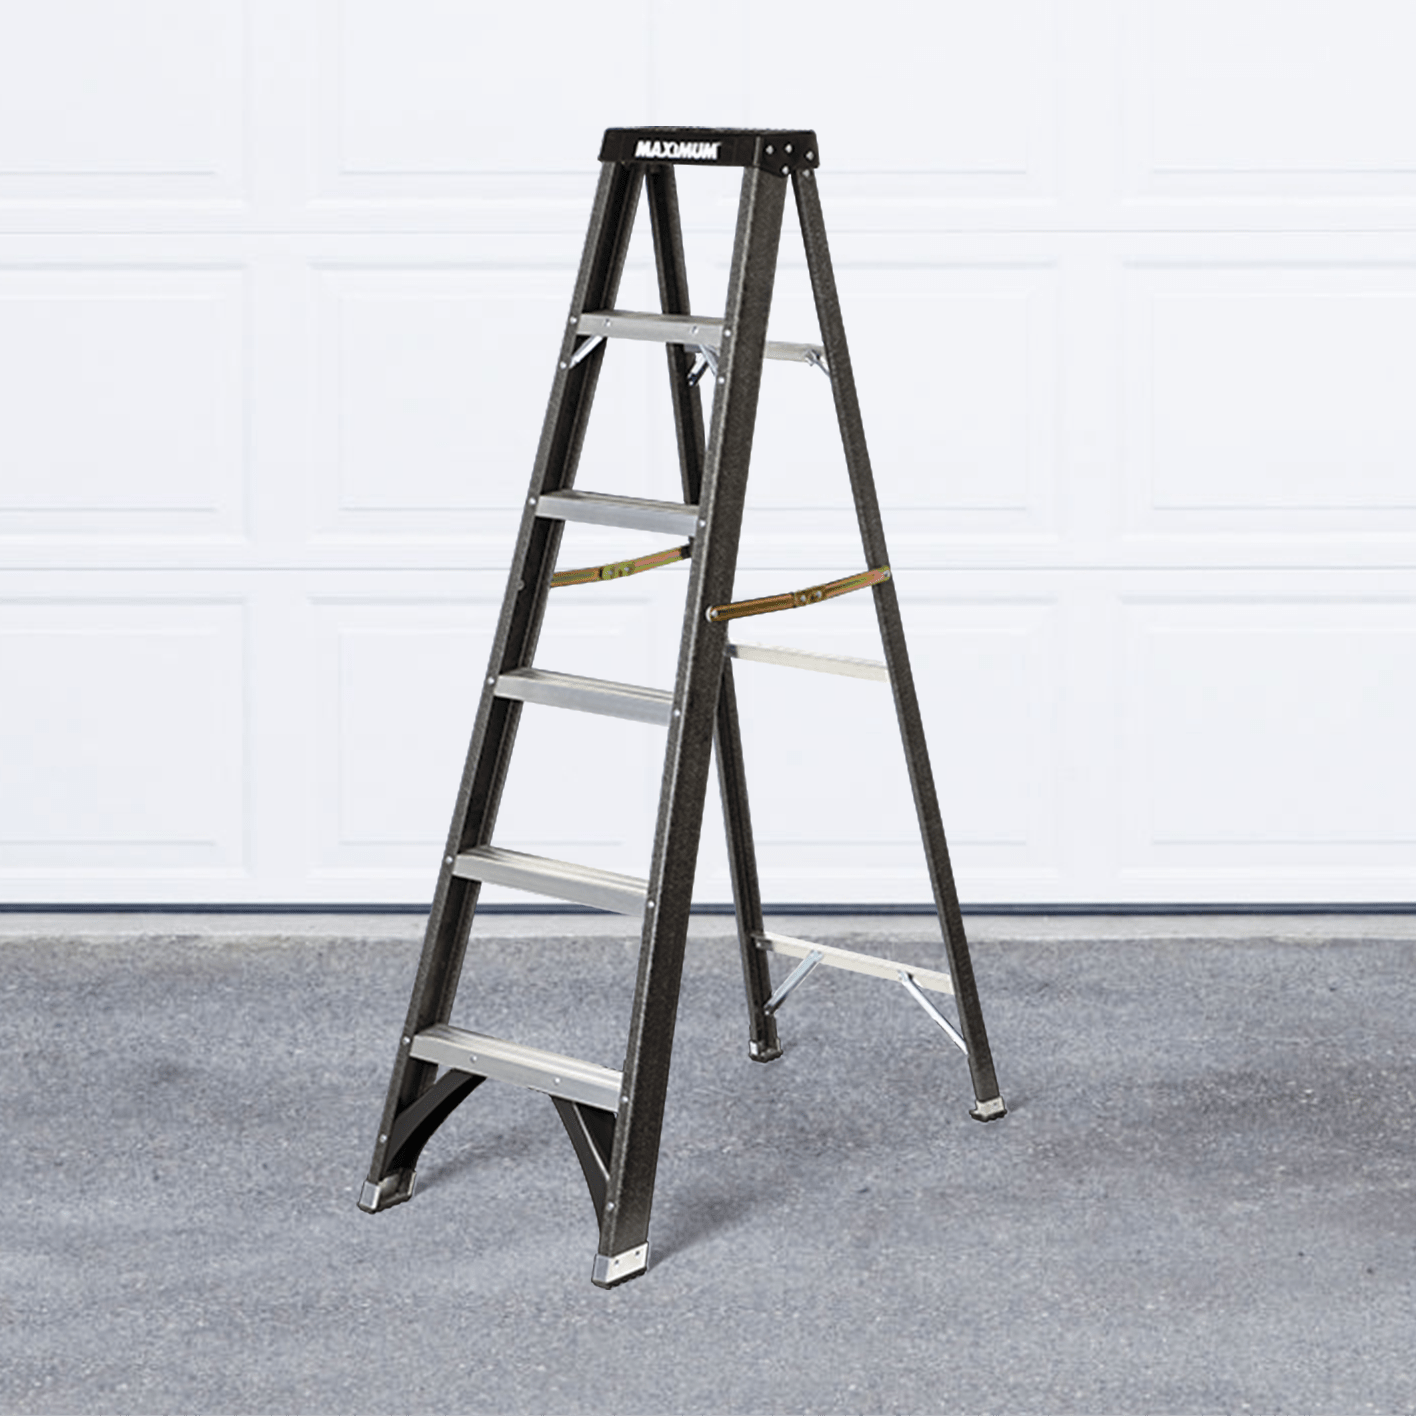 Maximum brand ladder set up outdoors